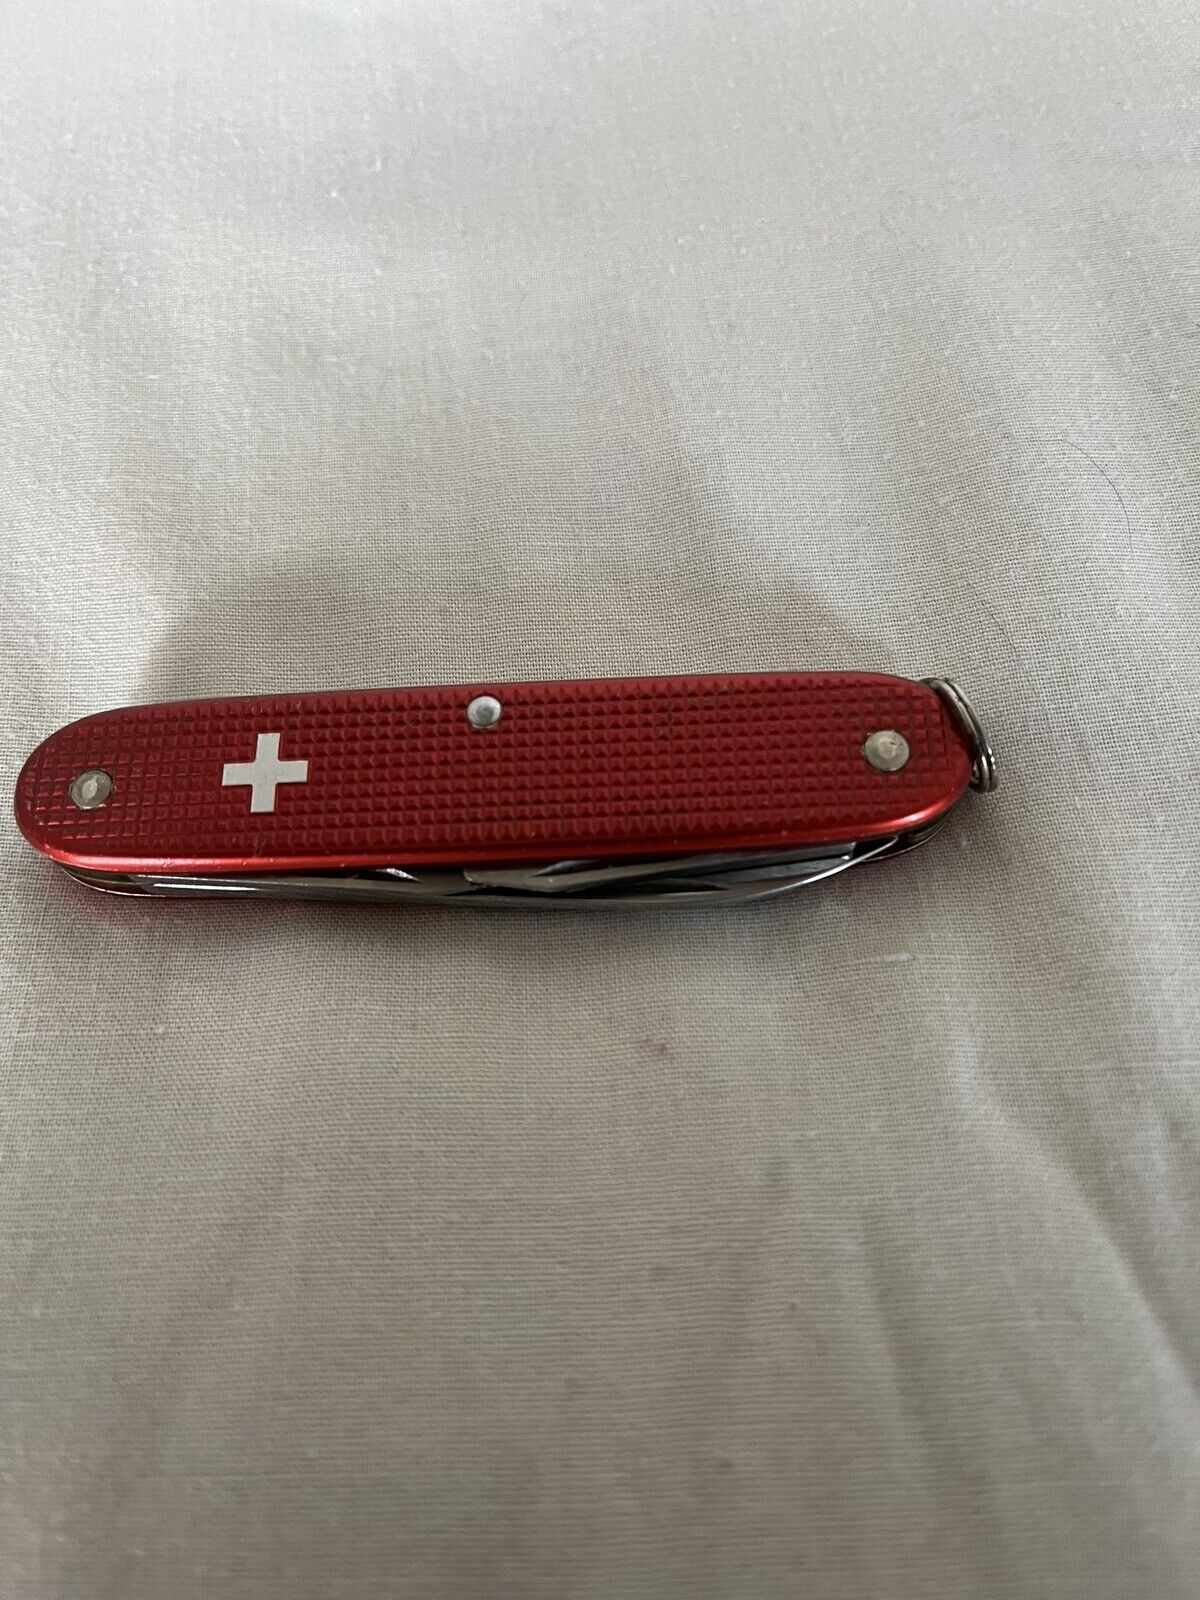 Victorinox \'Old Cross\' Pioneer Swiss Army knife (red)1974-1984